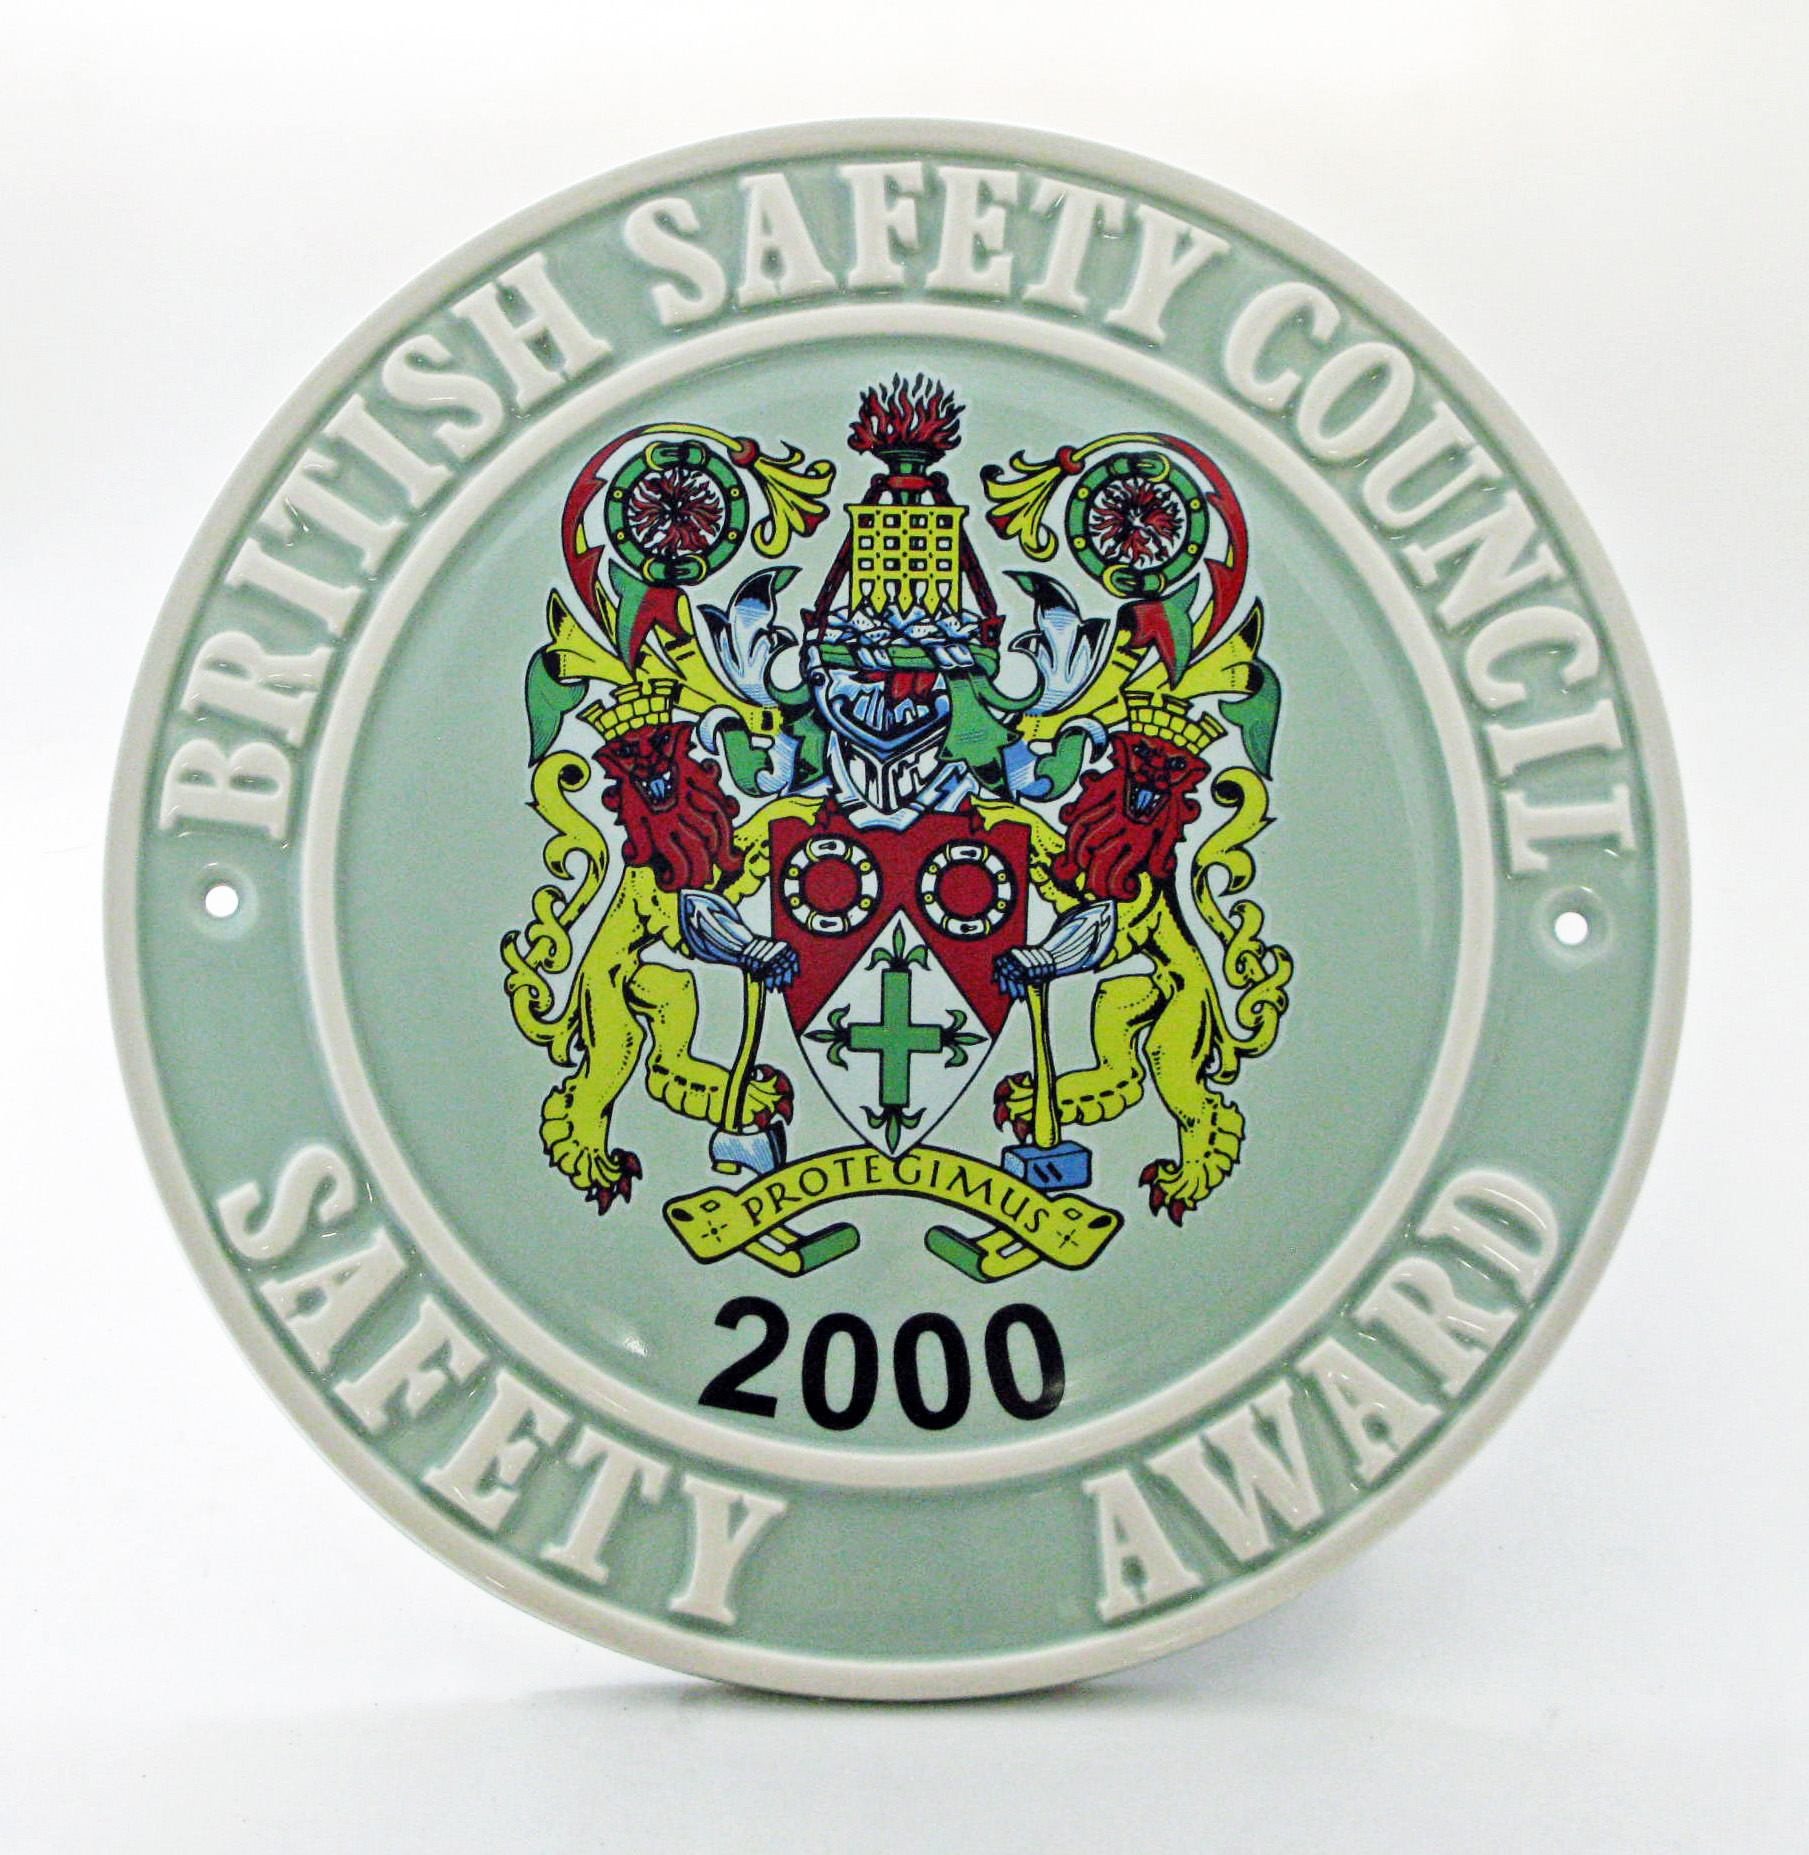 2000 Safety Award Plaque